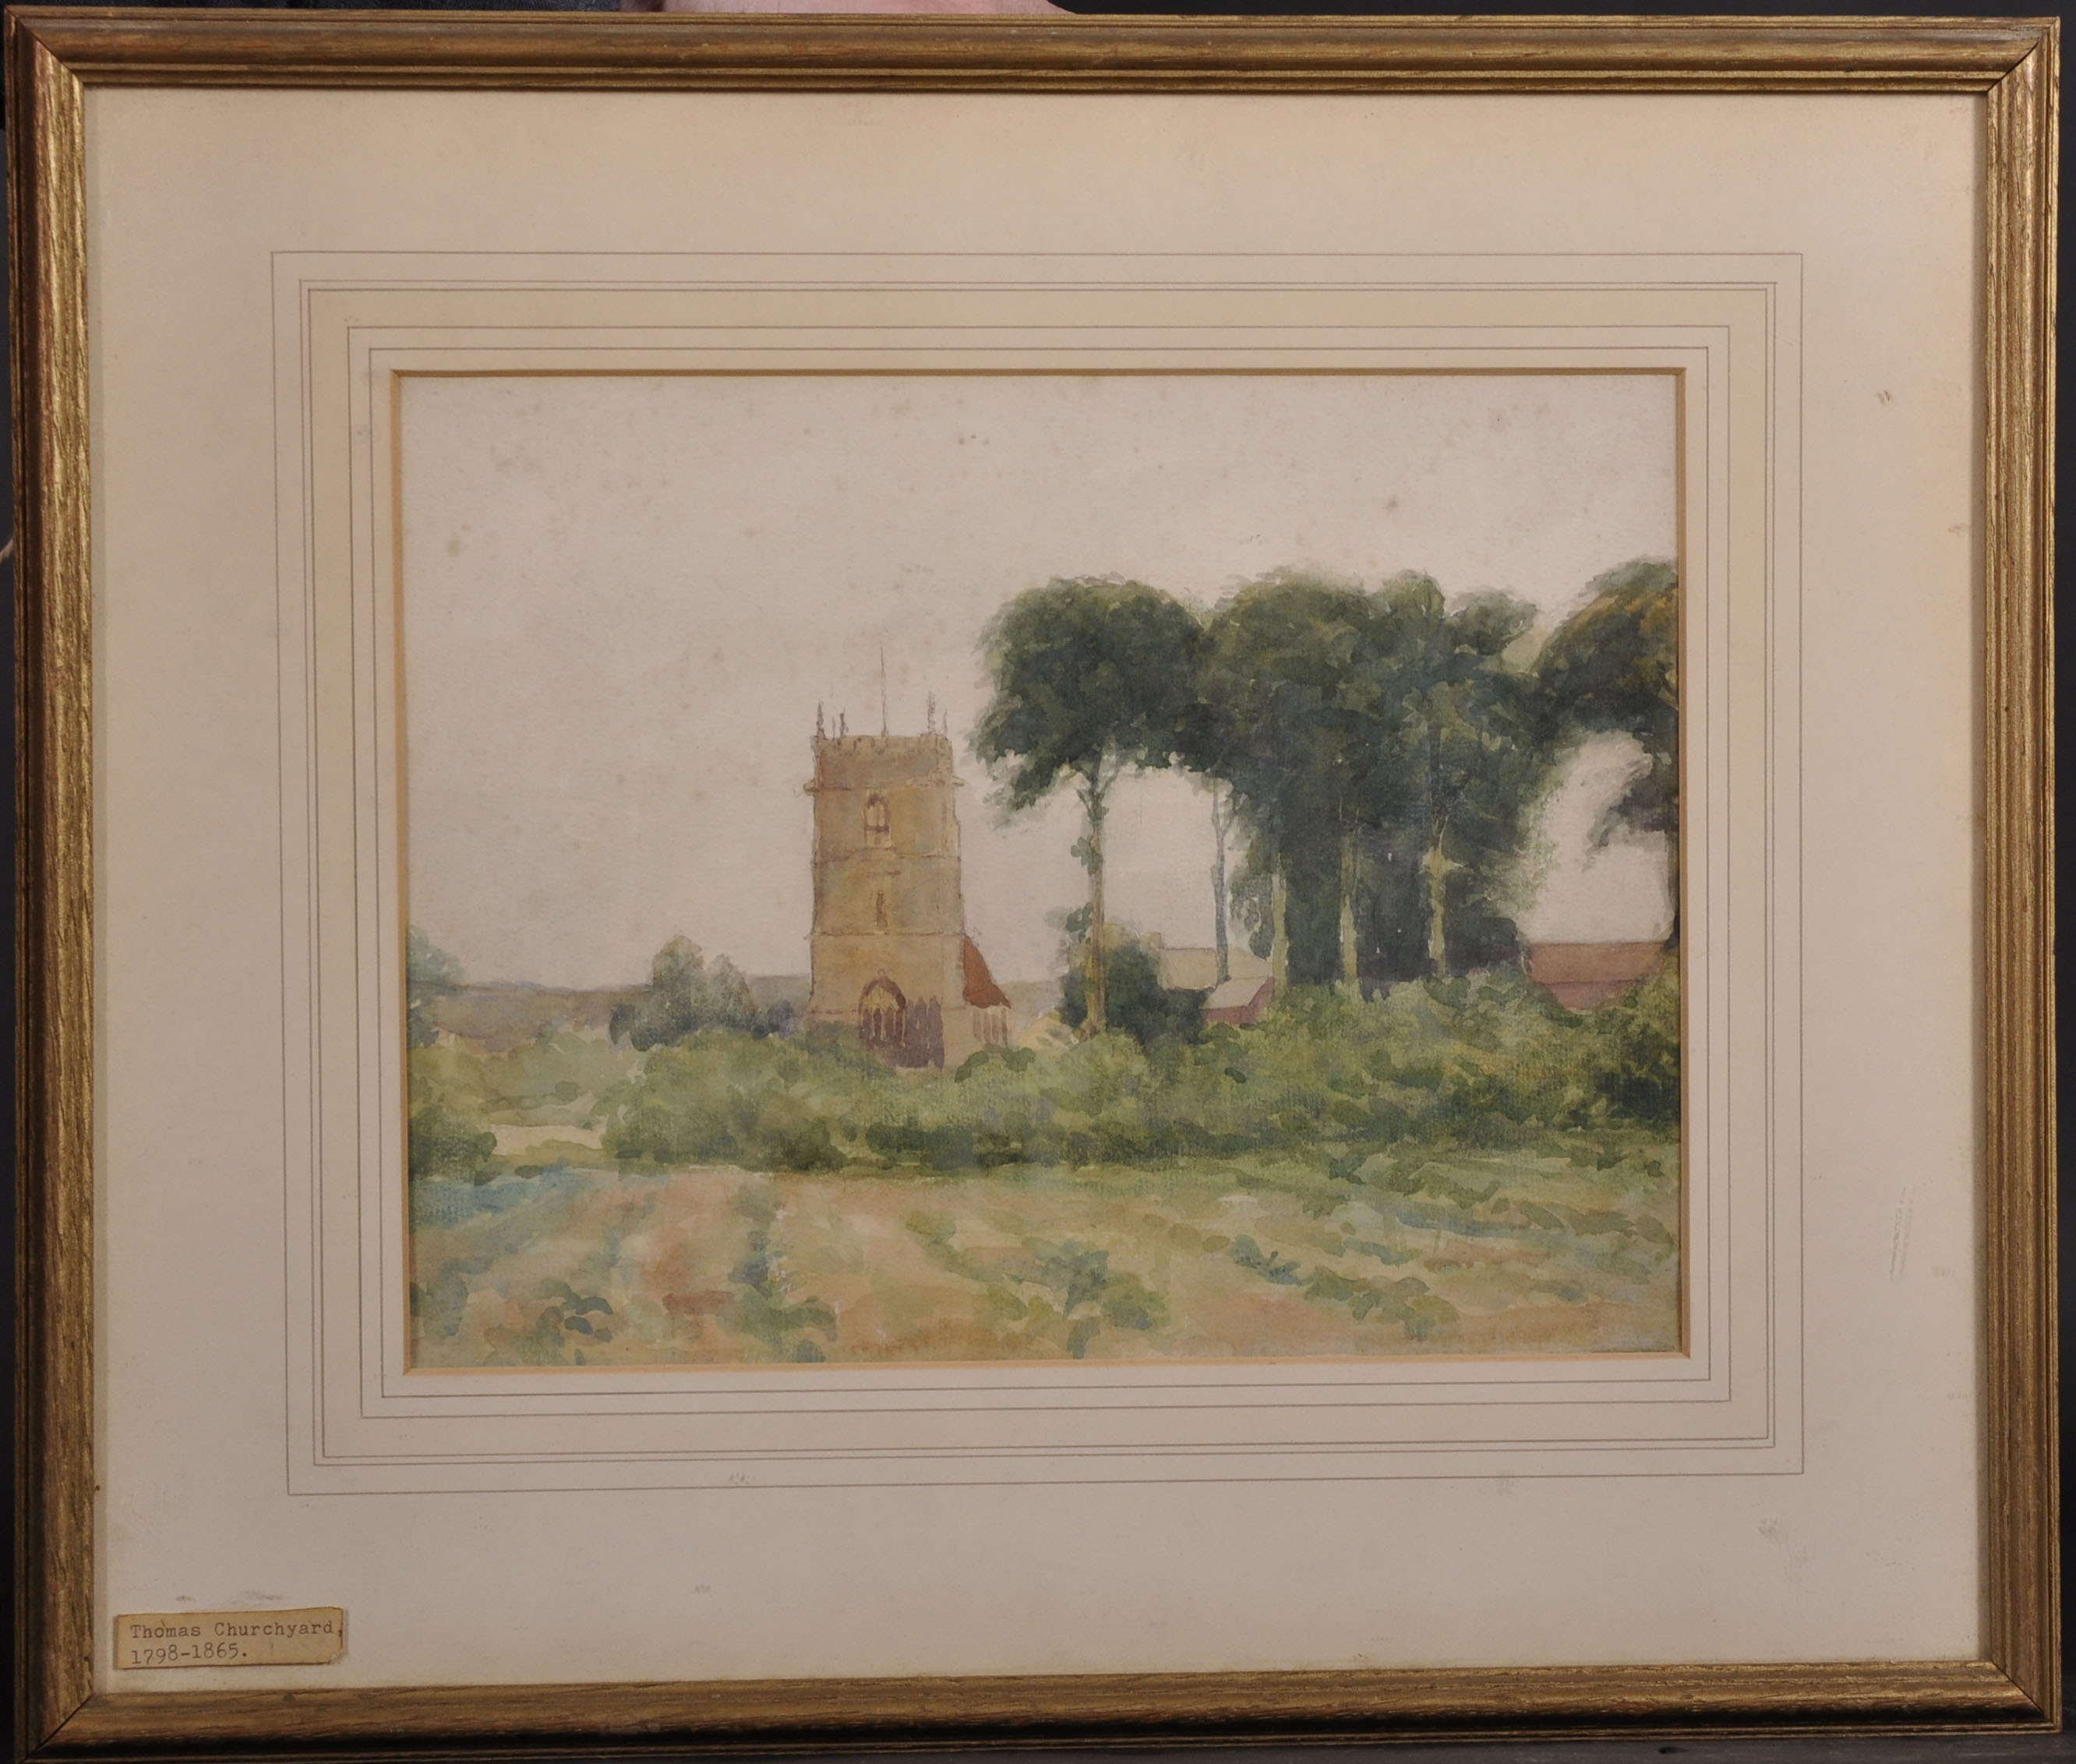 Attributed to Thomas Churchyard (1798-1865) British. A Village Church, Watercolour, 8” x 10.25” ( - Image 2 of 5